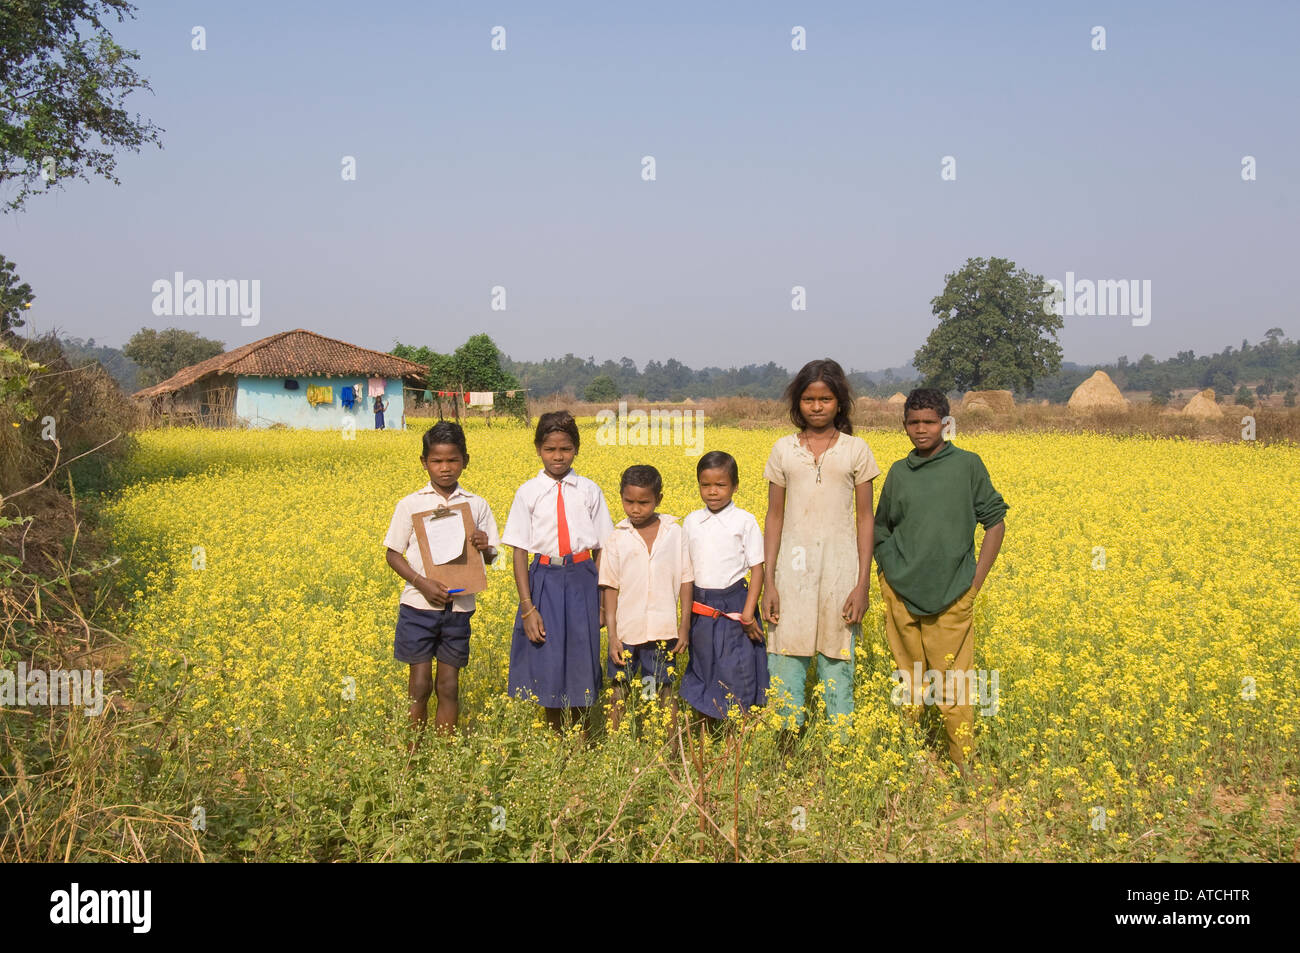 Indian Chldren in a mustard field Stock Photo